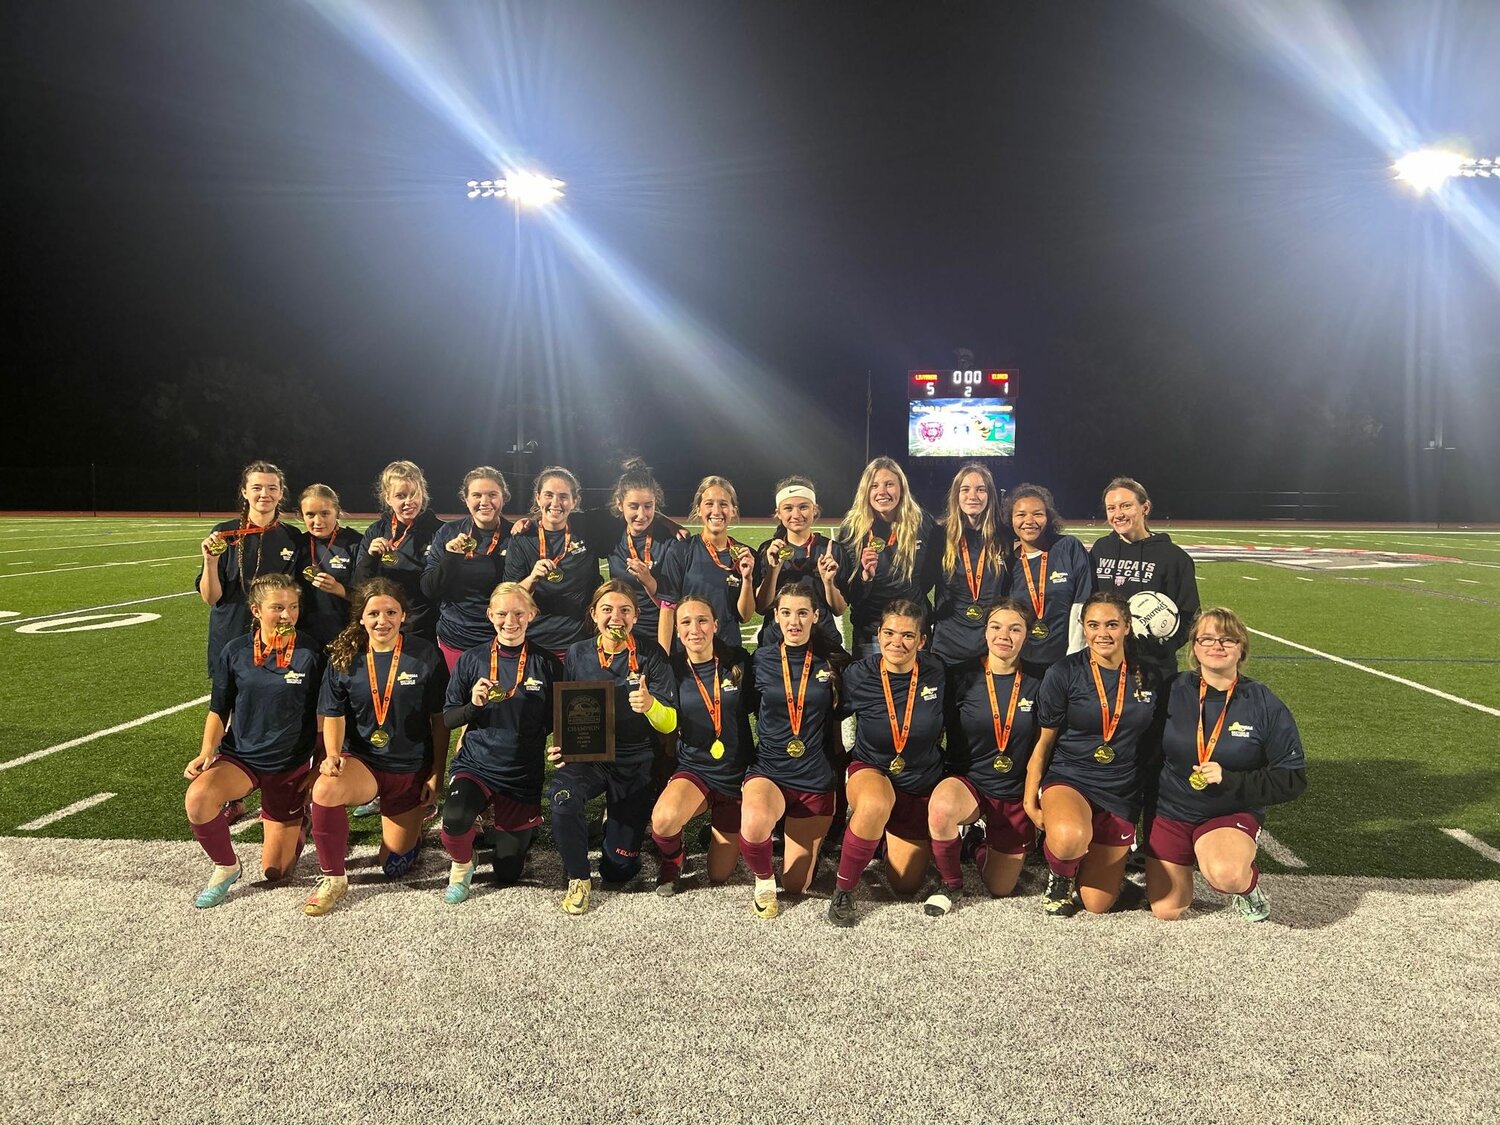 The Livingston Manor/Roscoe girls' varsity soccer team—the Section IX Class D champions.